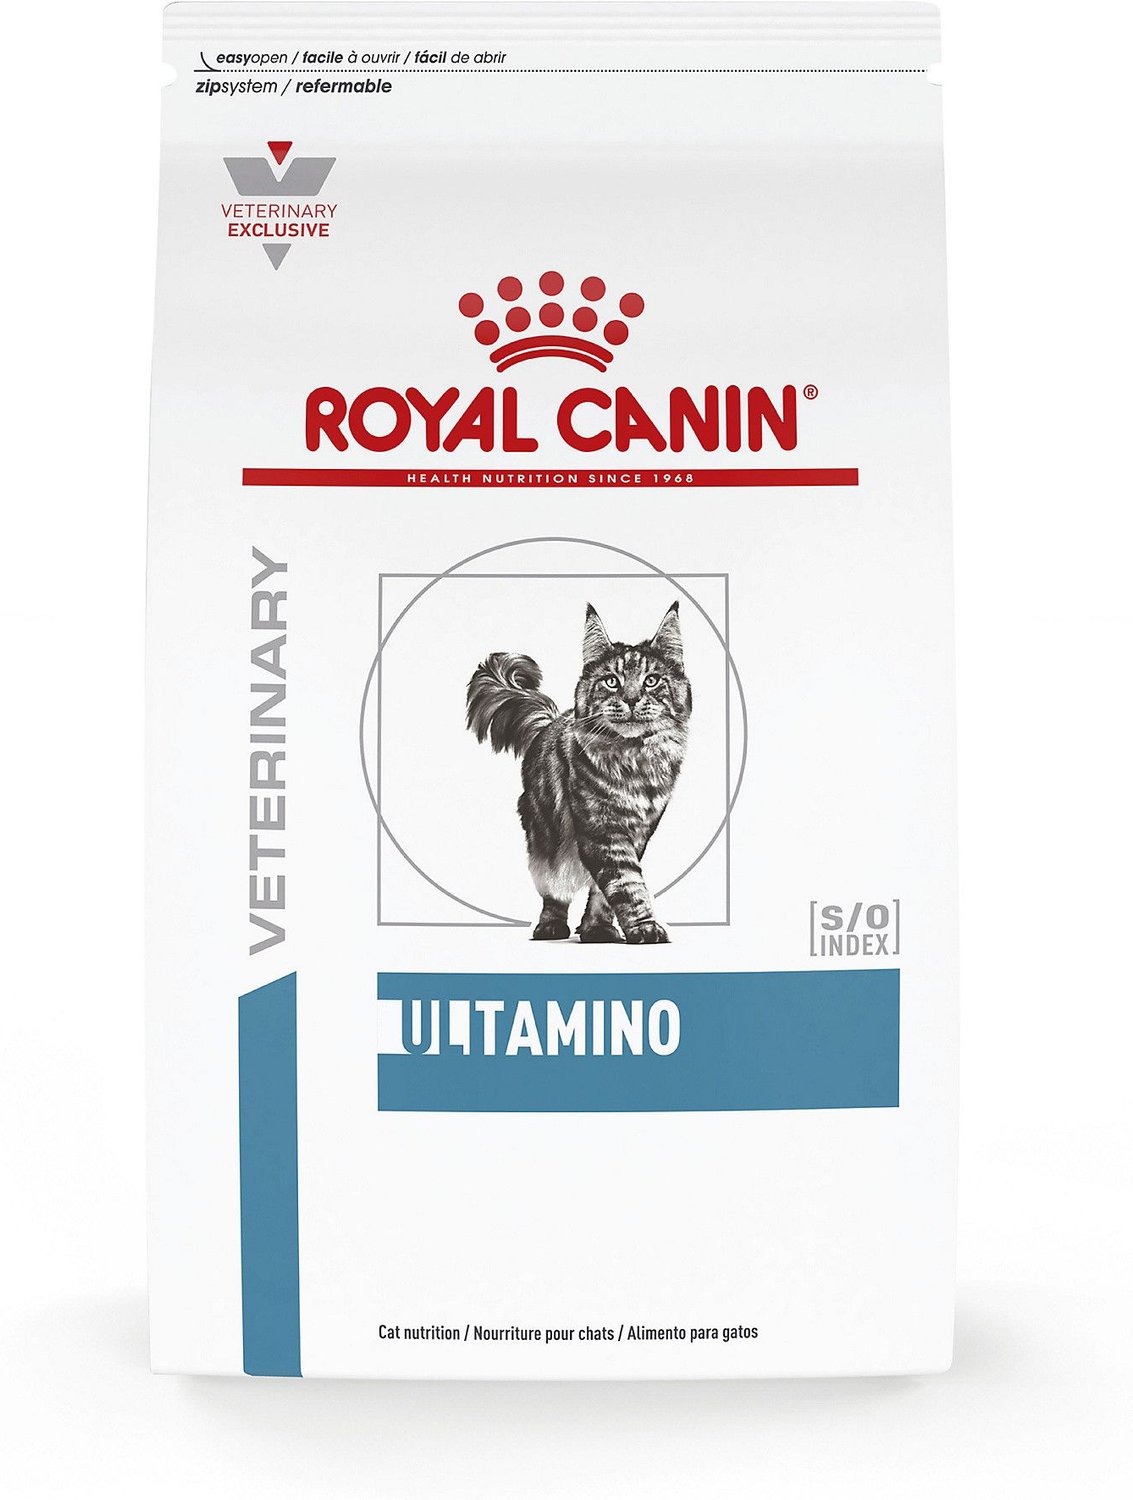 ROYAL CANIN VETERINARY DIET Ultamino Dry Cat Food, 5.5lb bag